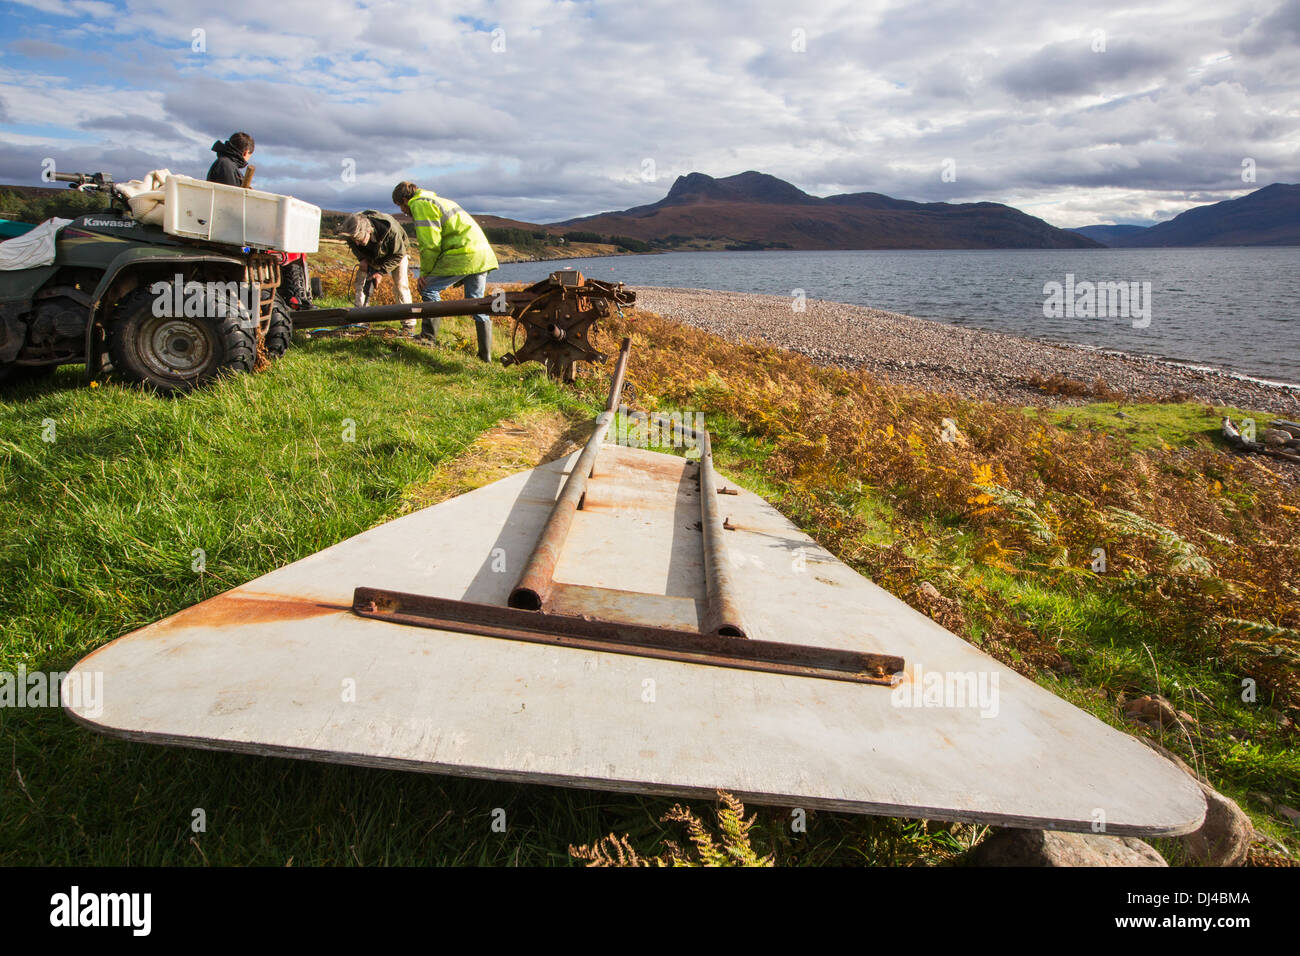 Hugh Piggott doing maintenance on his home made wind turbines in Scoraig, in NW Scotland, a remote off grid, communitiy, UK Stock Photo